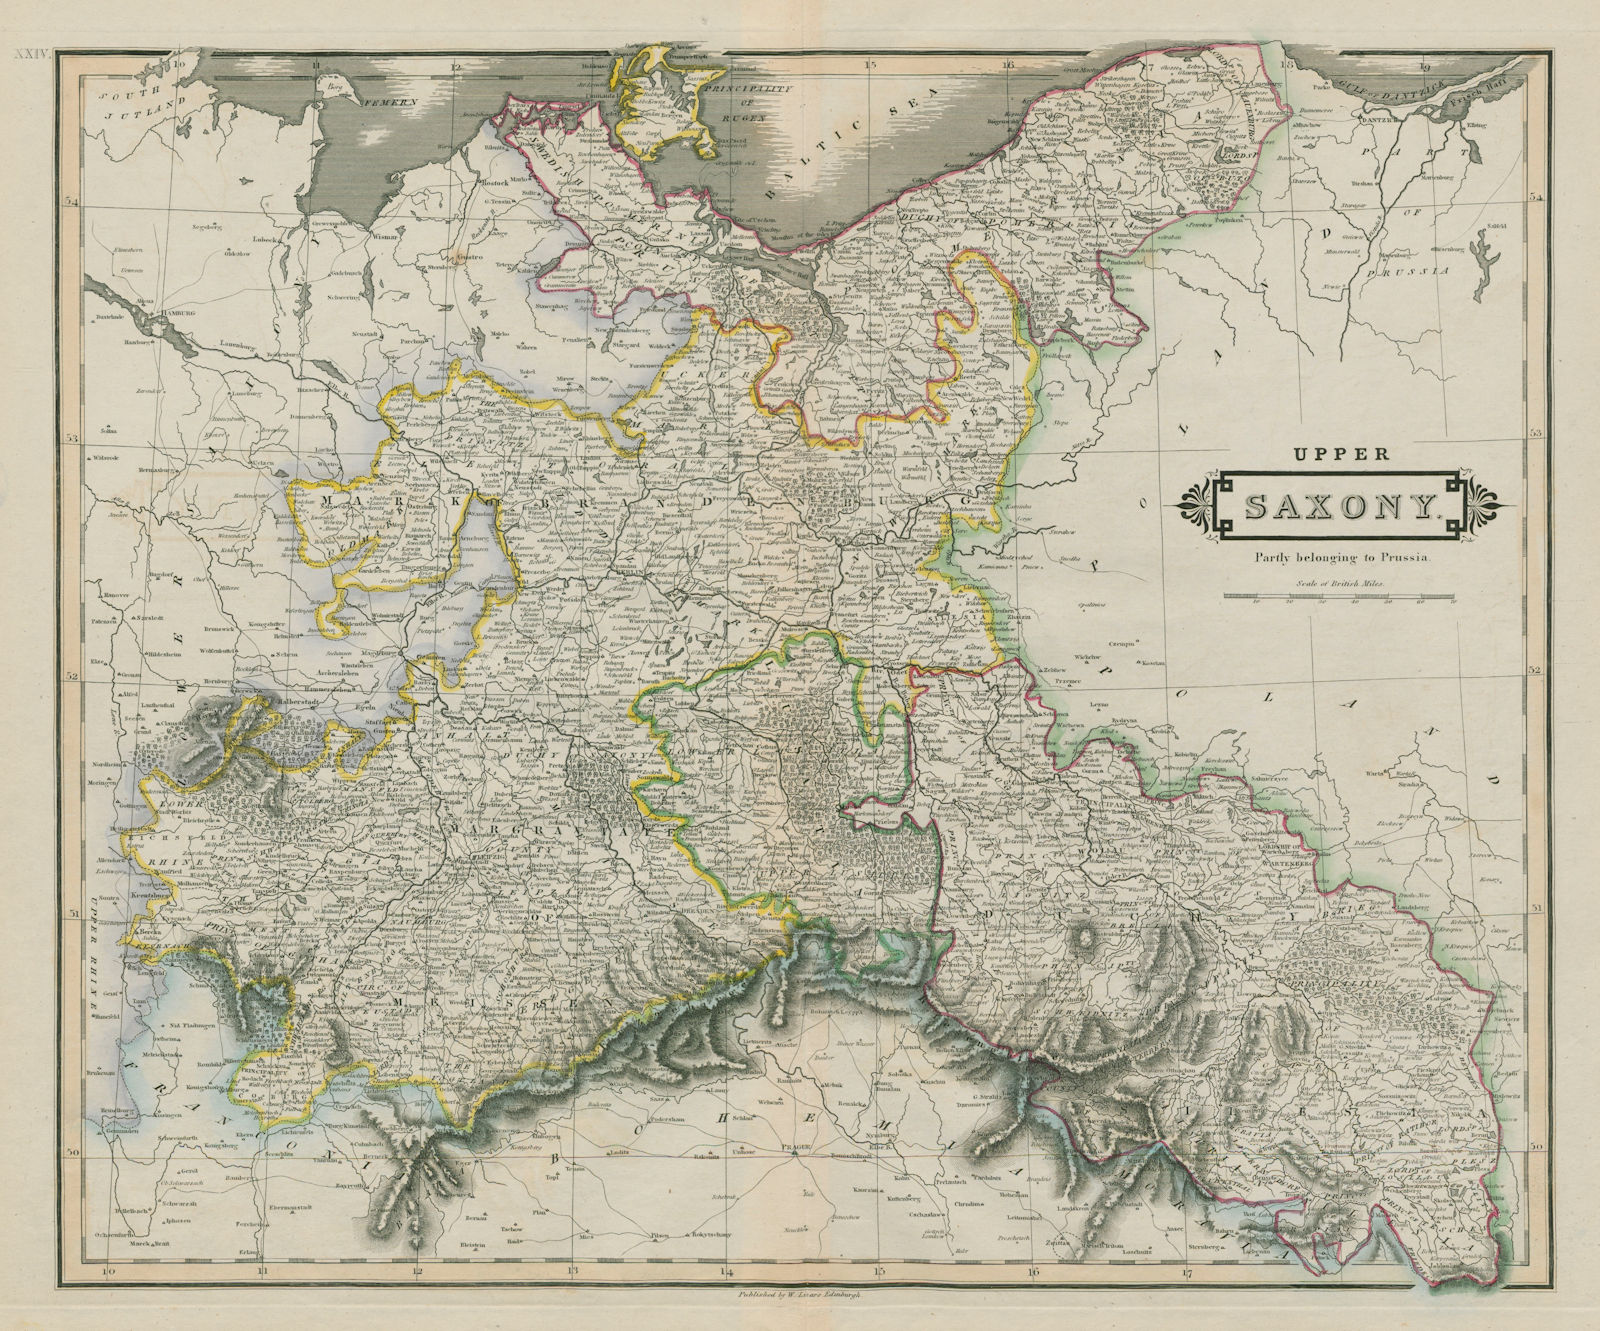 Upper Saxony, partly belonging to Prussia. E Germany. W Poland. LIZARS 1842 map